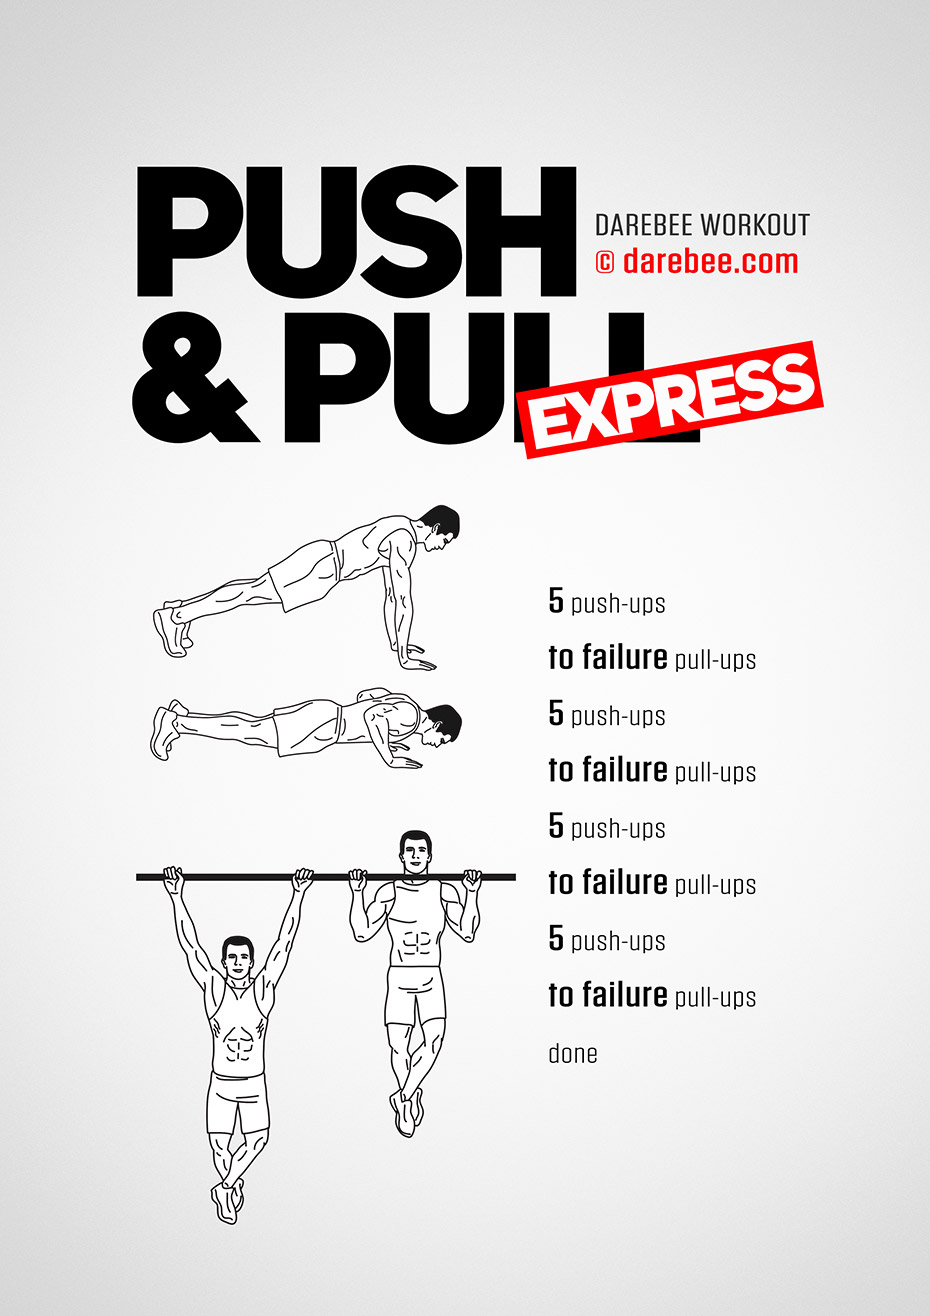 Push & Pull Express